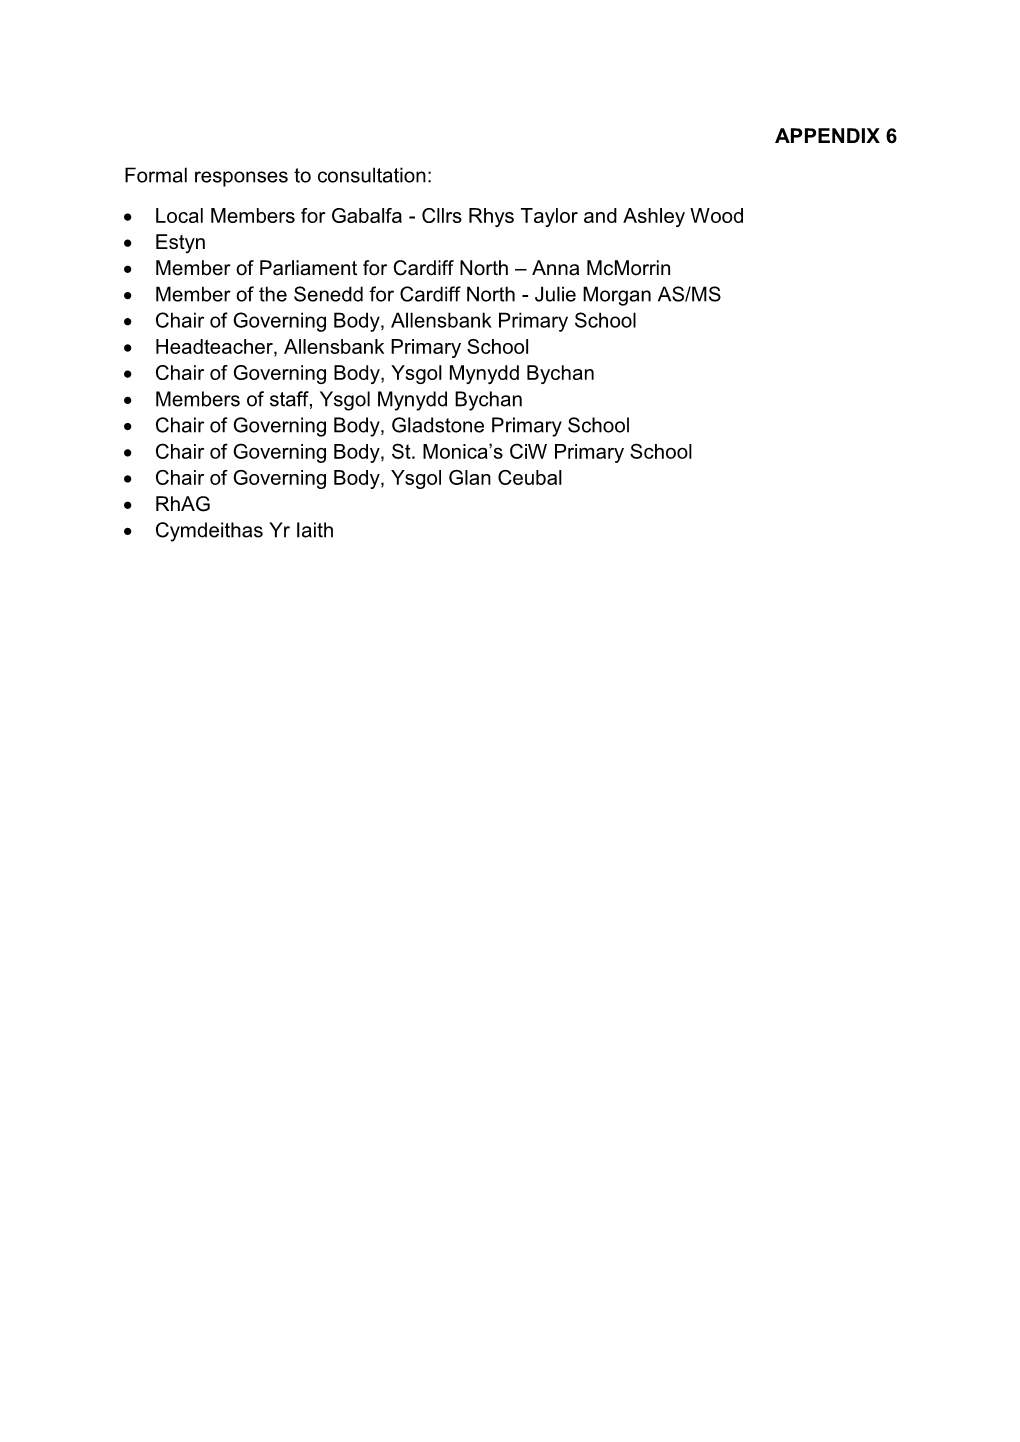 Cabinet 17 June 2021 SOP Mynydd Allens App 6 PDF 2 MB